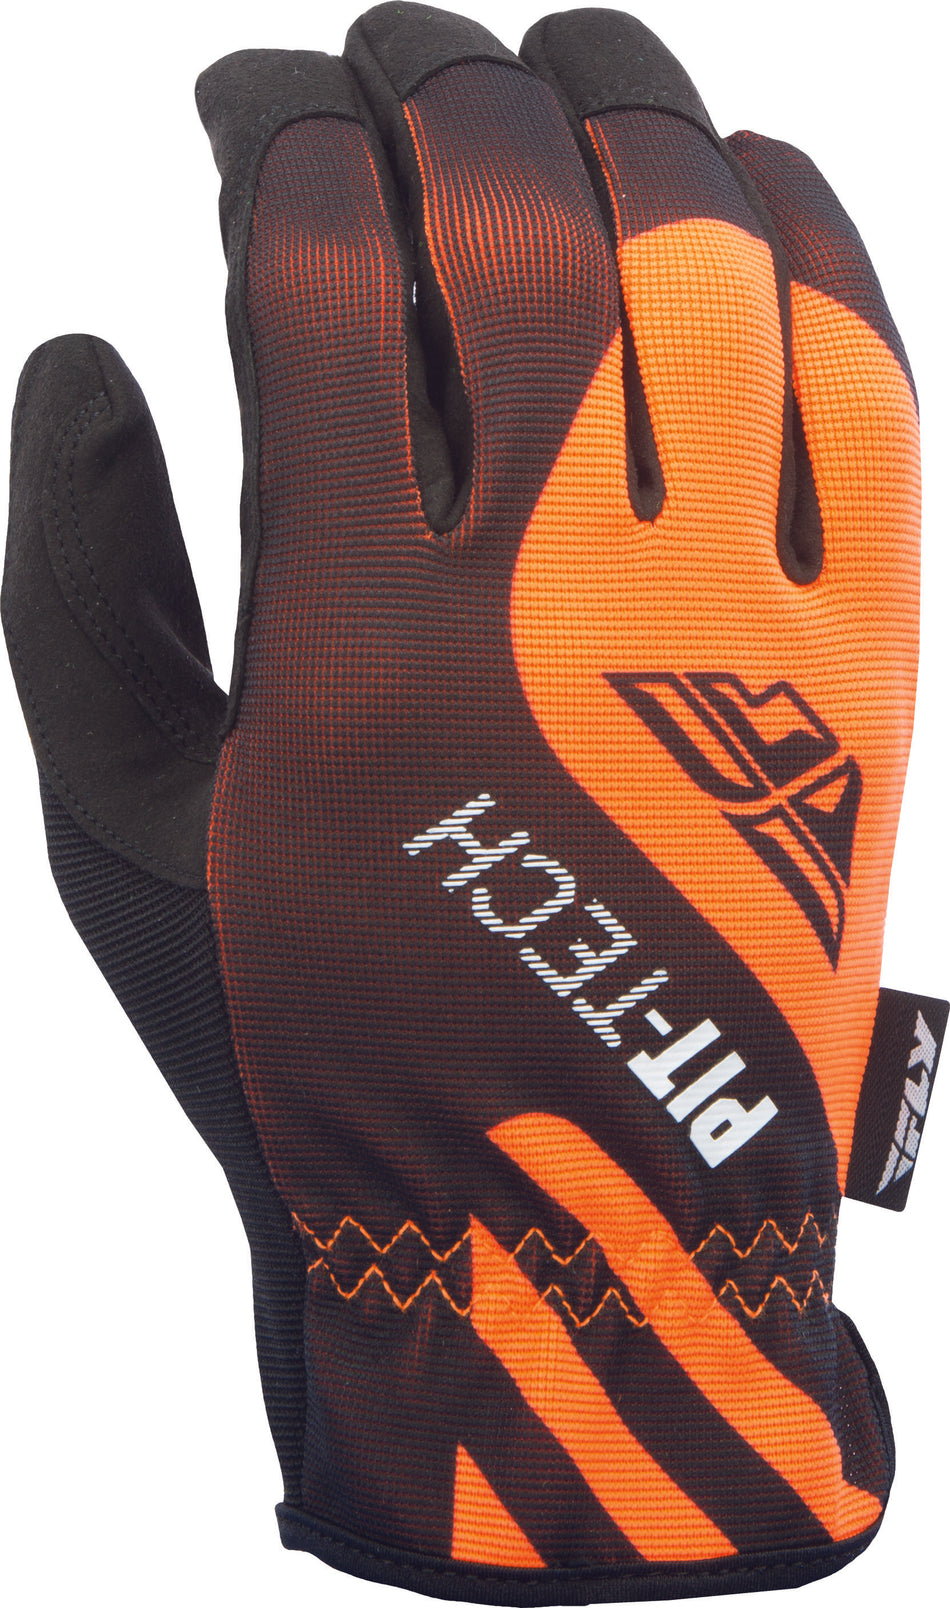 FLY RACING Pit Tech Lite Glove Flo-Orange/Black 2x 370-04712